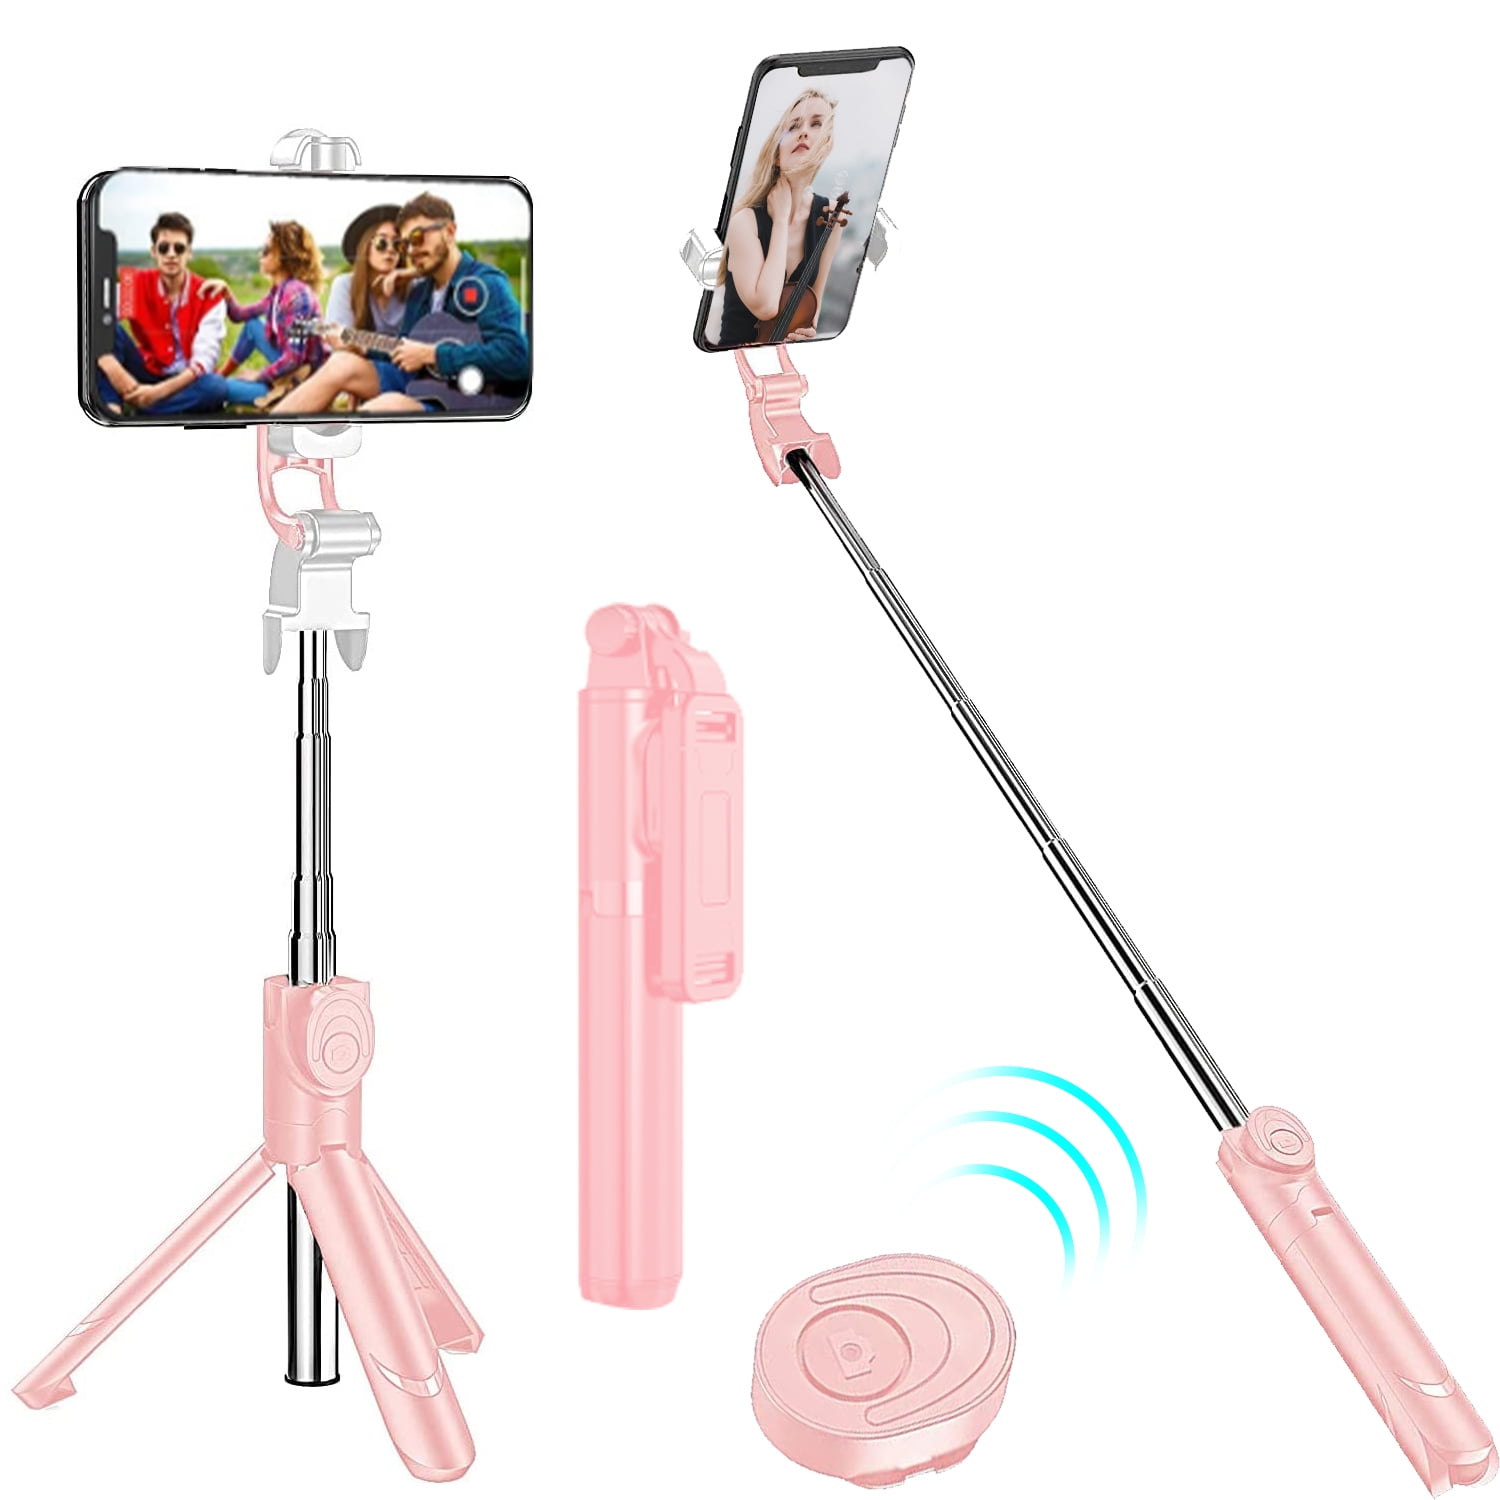 Bluetooth Selfie Stick, Extendable Tripod Selfie Stick with Wireless Remote Compatible iPhone XR/XS/X/8/Plus/7/Plus/SE/6S/6/Plus, Galaxy S9/S8/S7/S6, More, Pink - Walmart.com